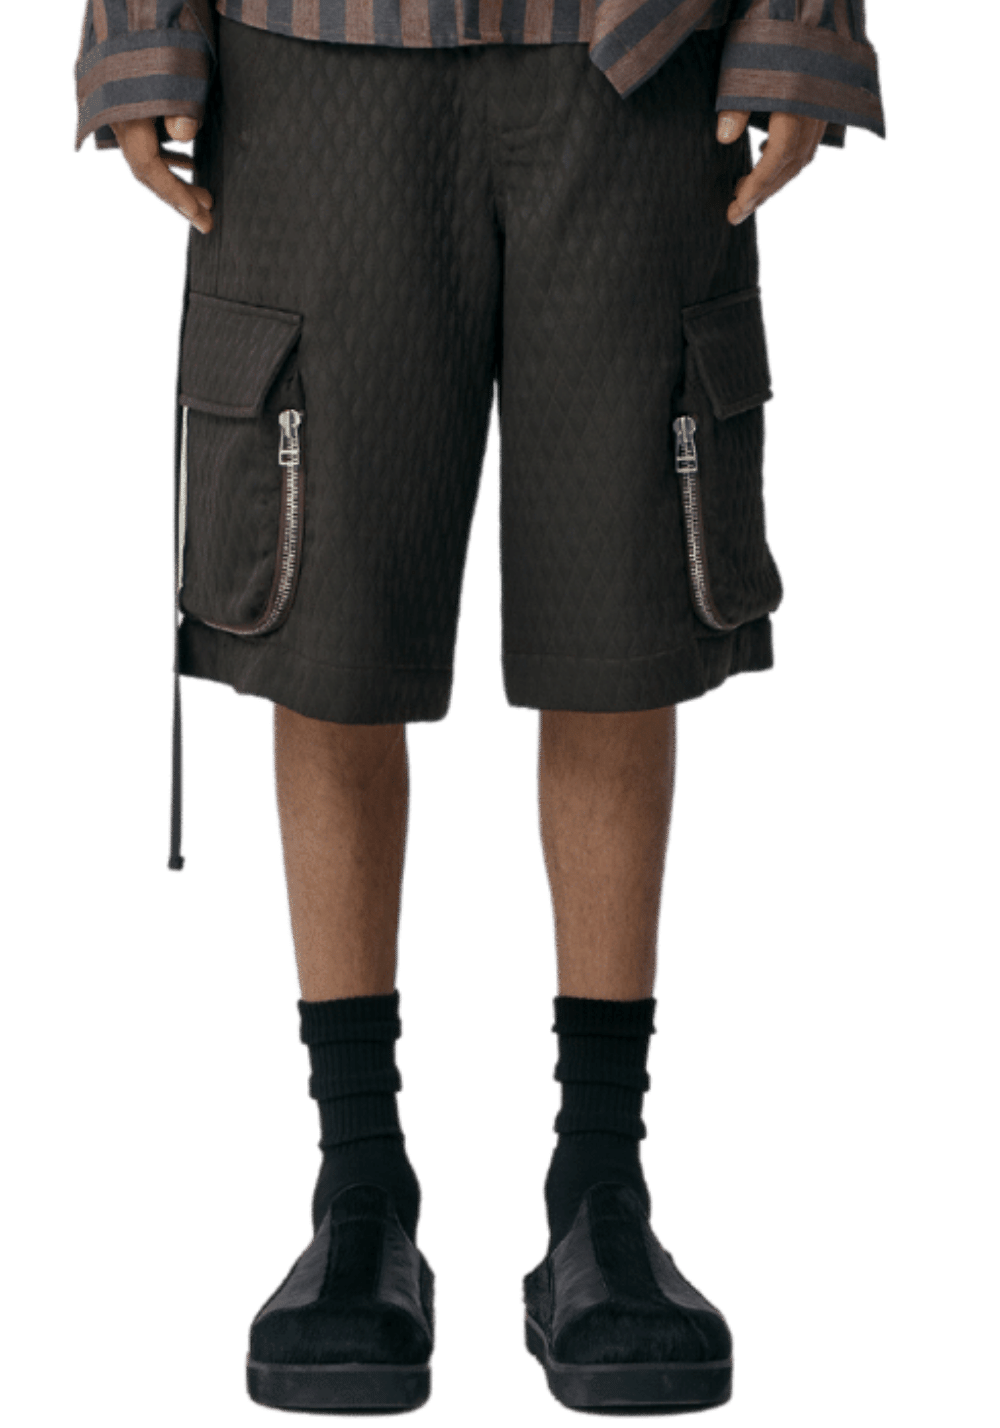 Belted Lozenge Shorts - PSYLOS 1, Belted Lozenge Shorts, Shorts, The Last Redemption, PSYLOS 1